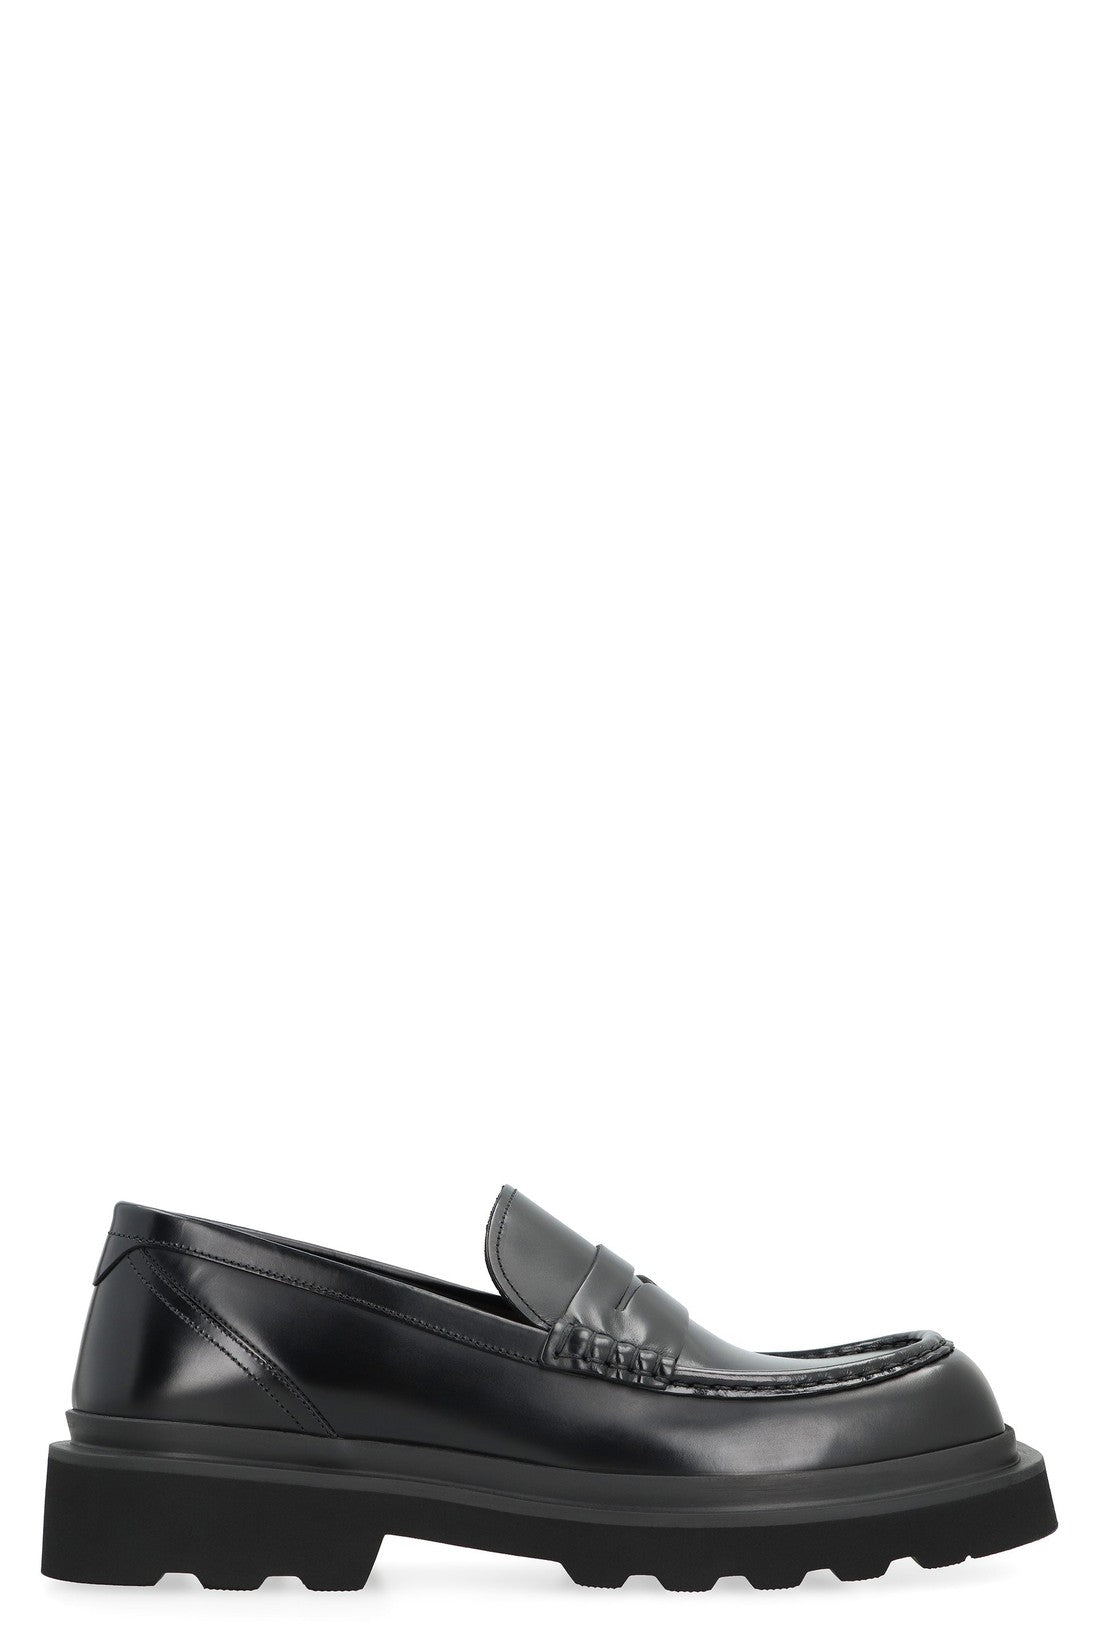 Dolce & Gabbana-OUTLET-SALE-Calfskin loafers-ARCHIVIST